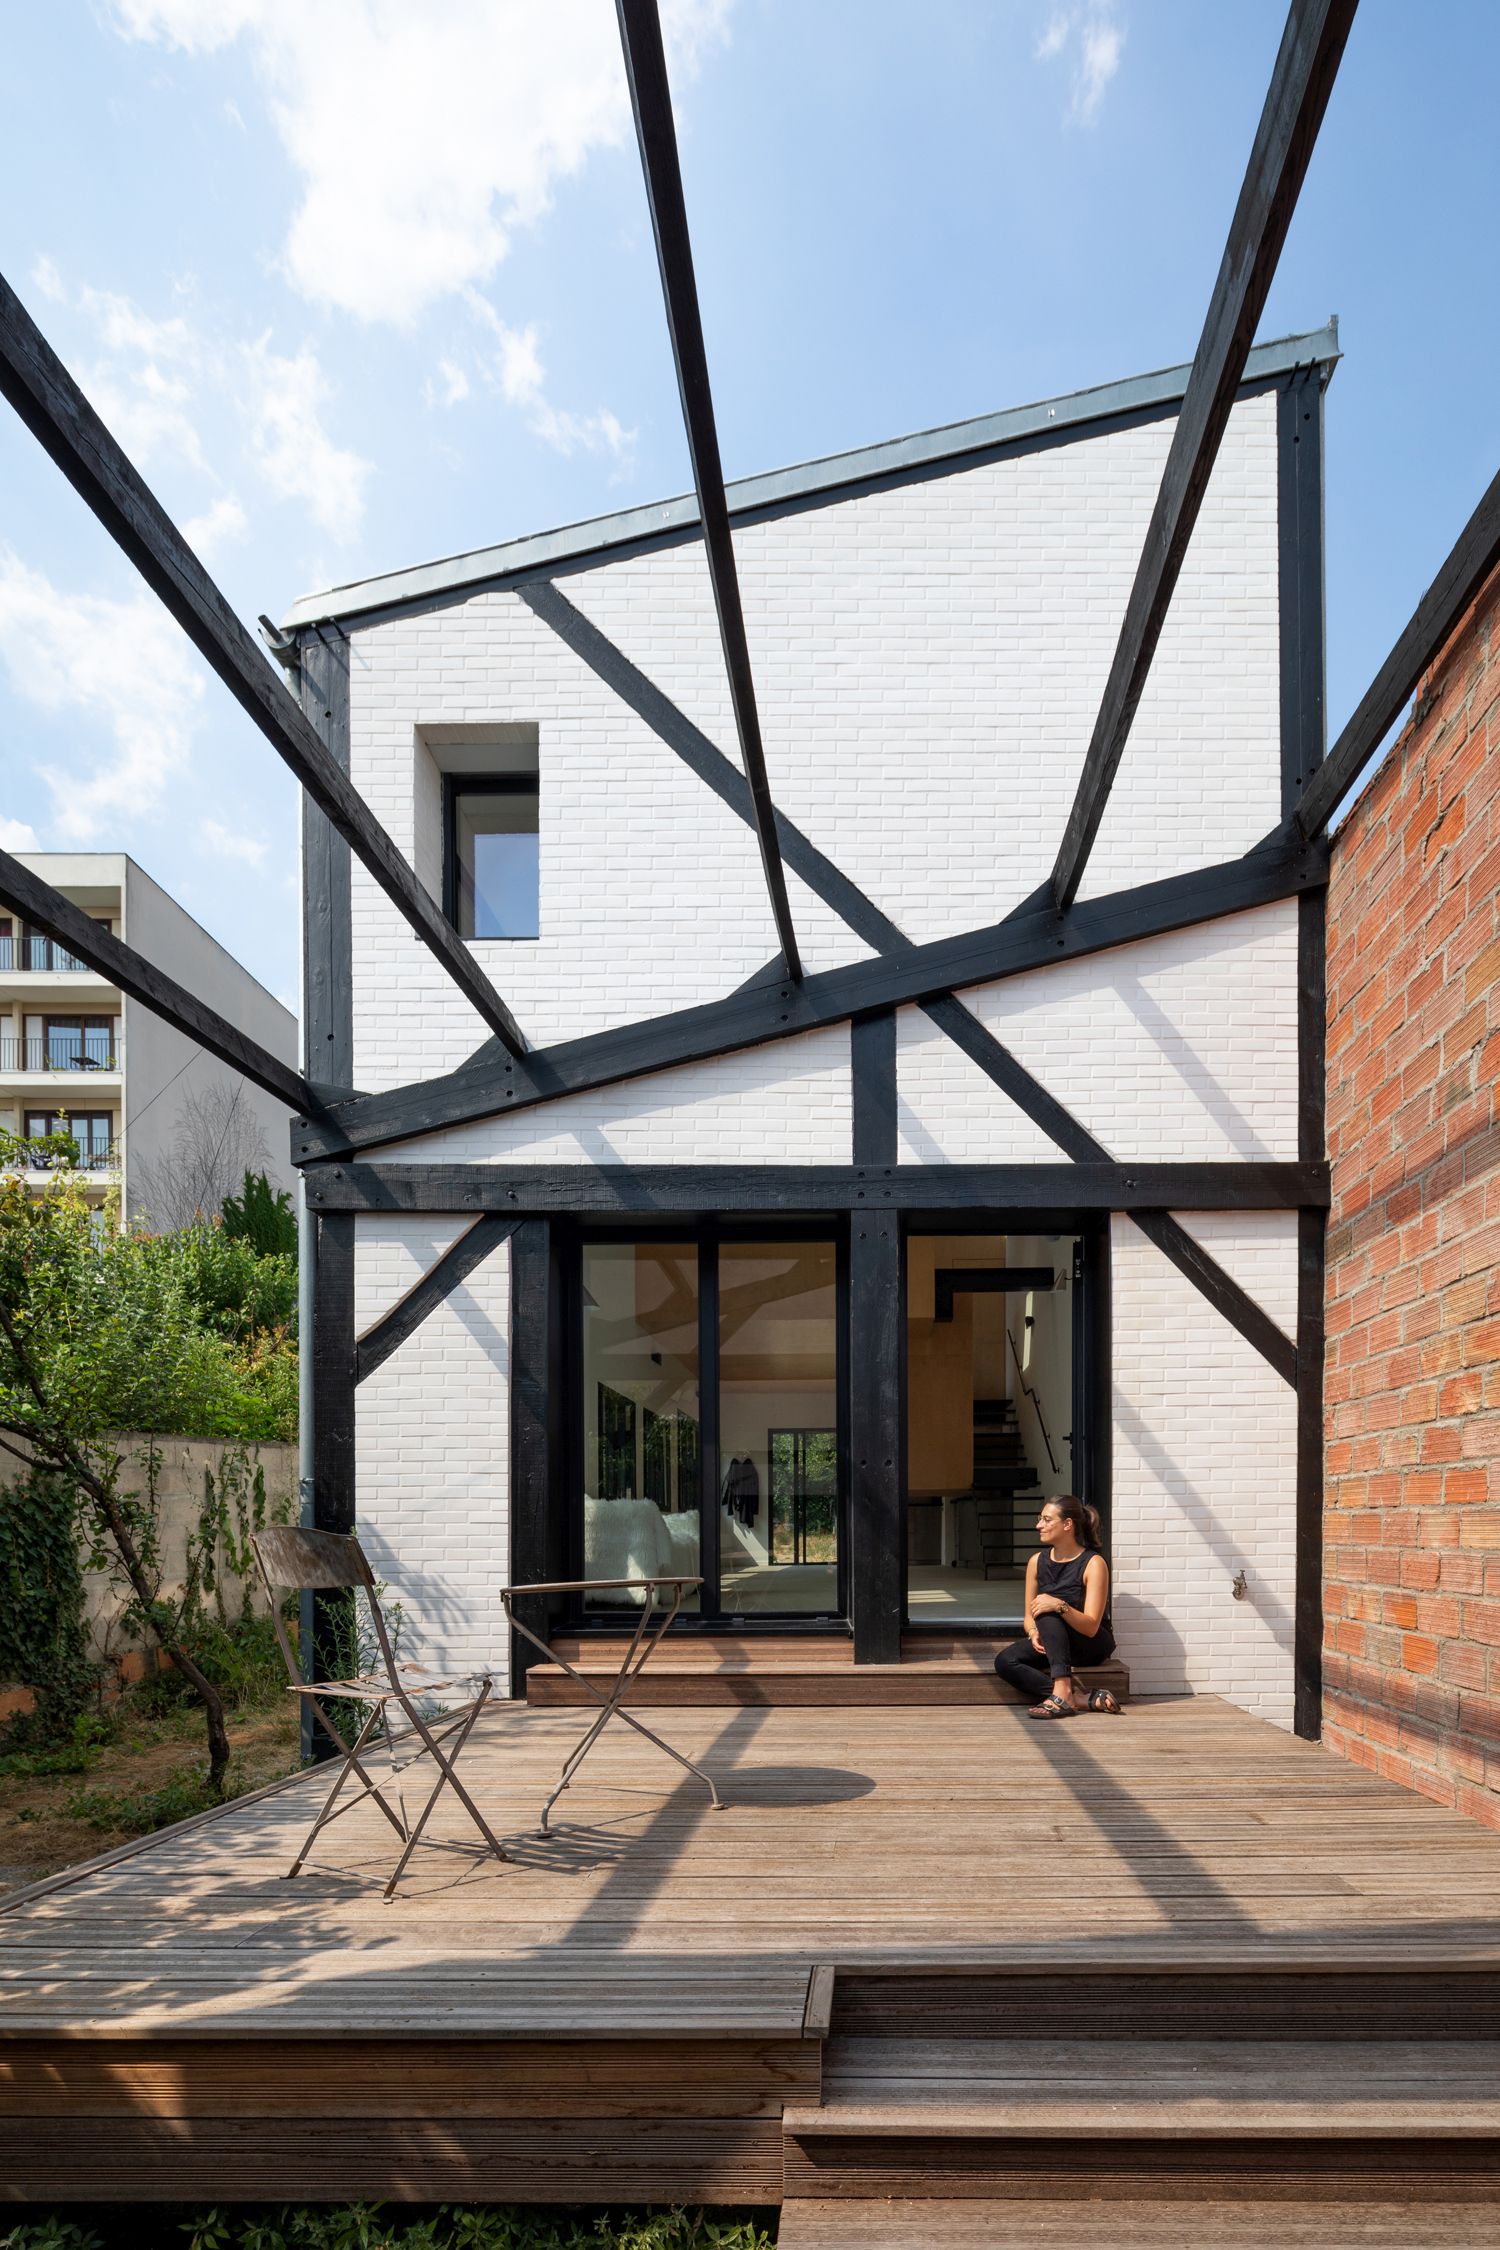 Transforming a carpenter's studio into an innovative modern home